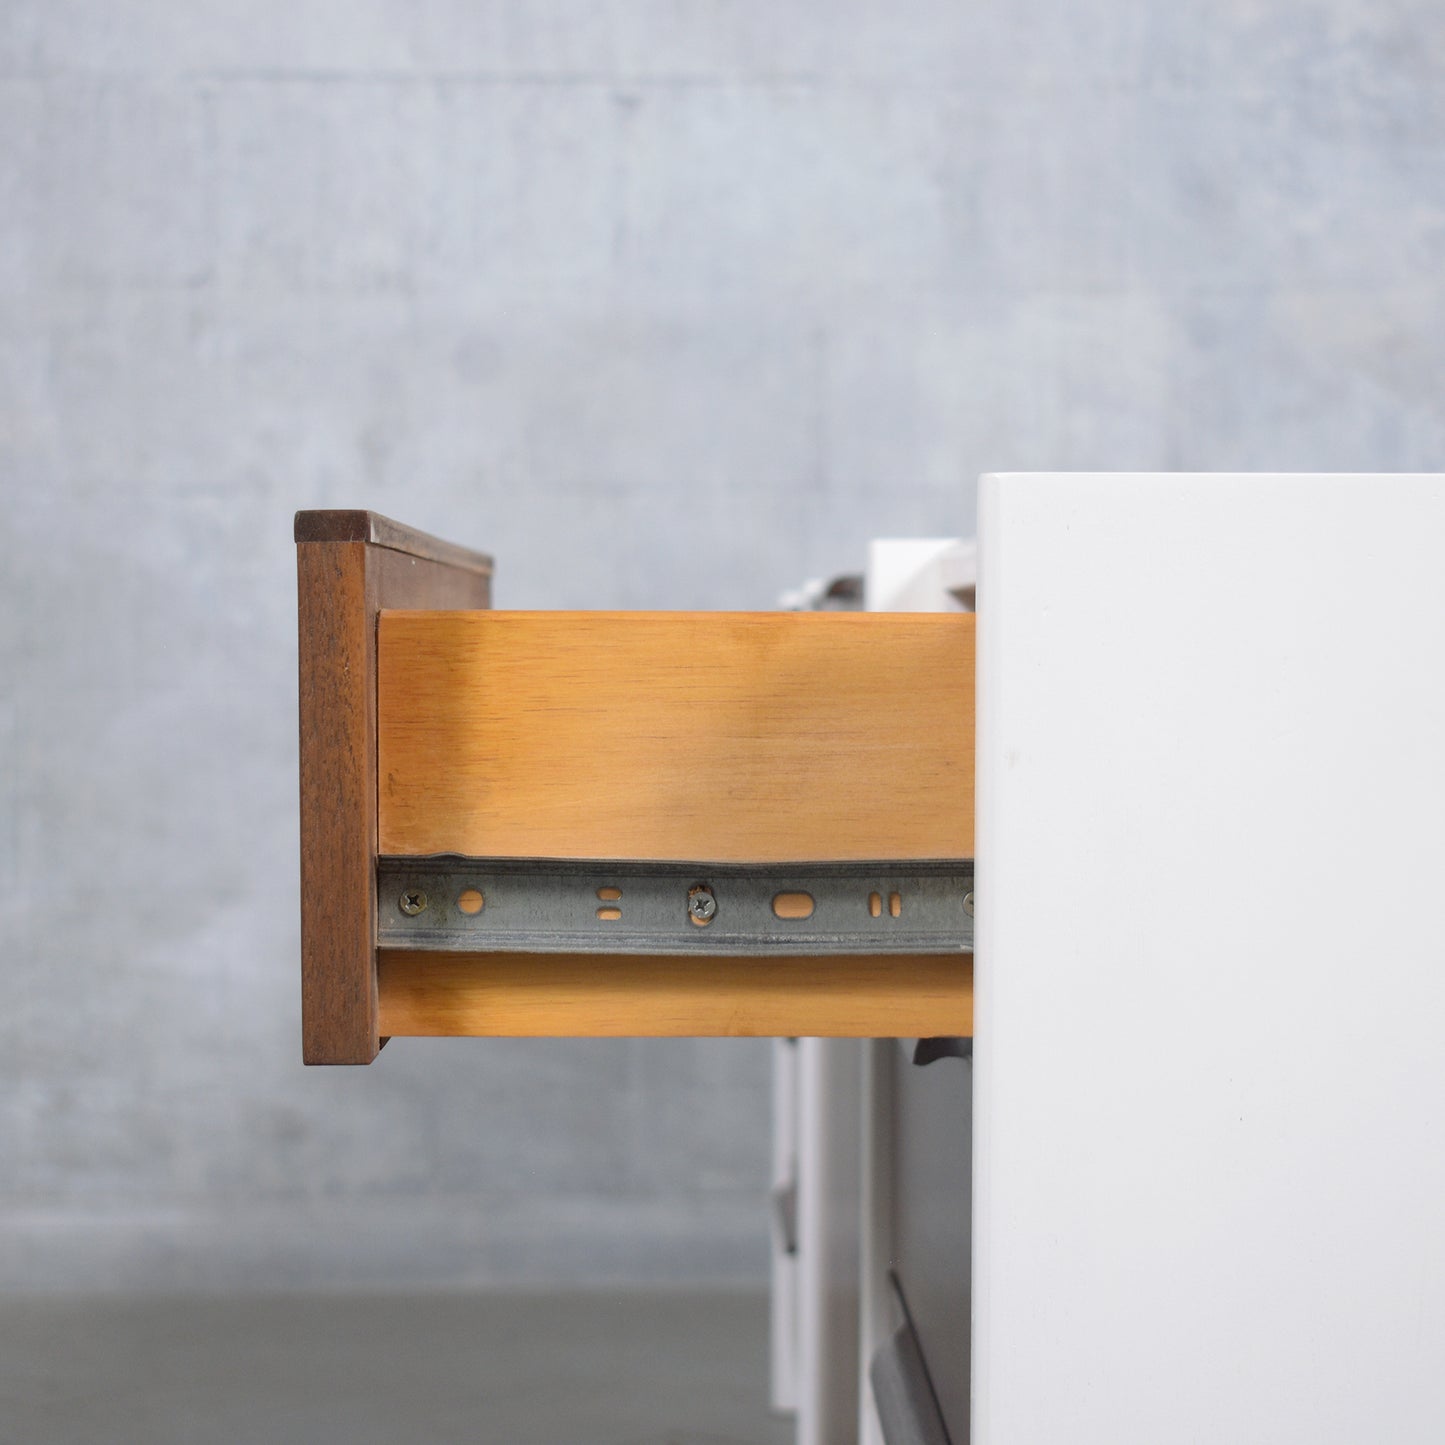 1960s Danish Executive Cabinet: Timeless Walnut Craftsmanship & Design